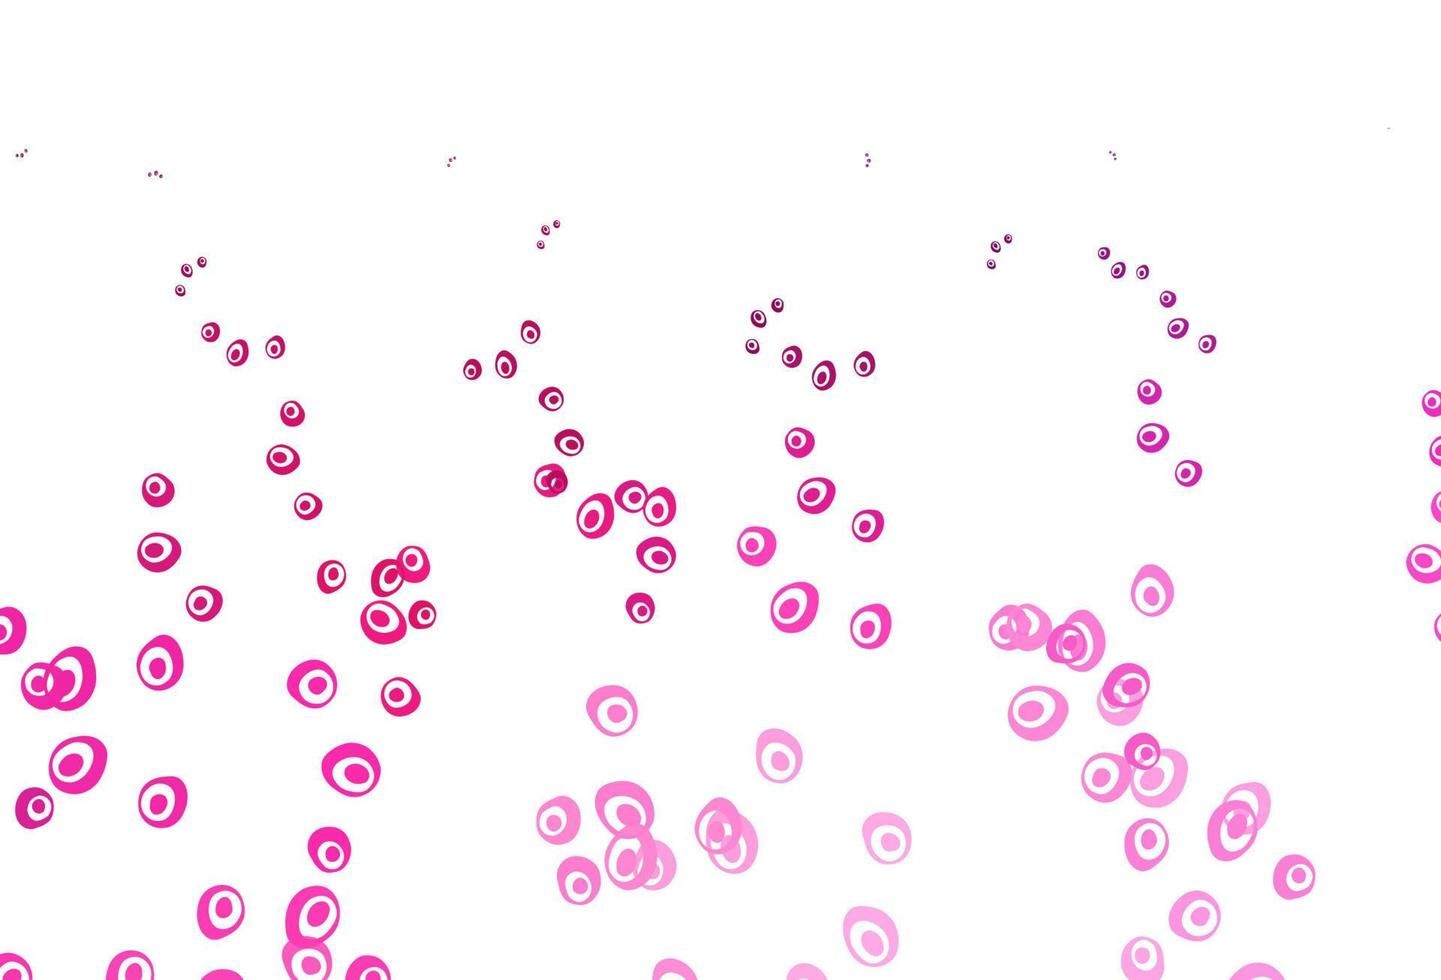 Fondo de vector rosa claro con burbujas.